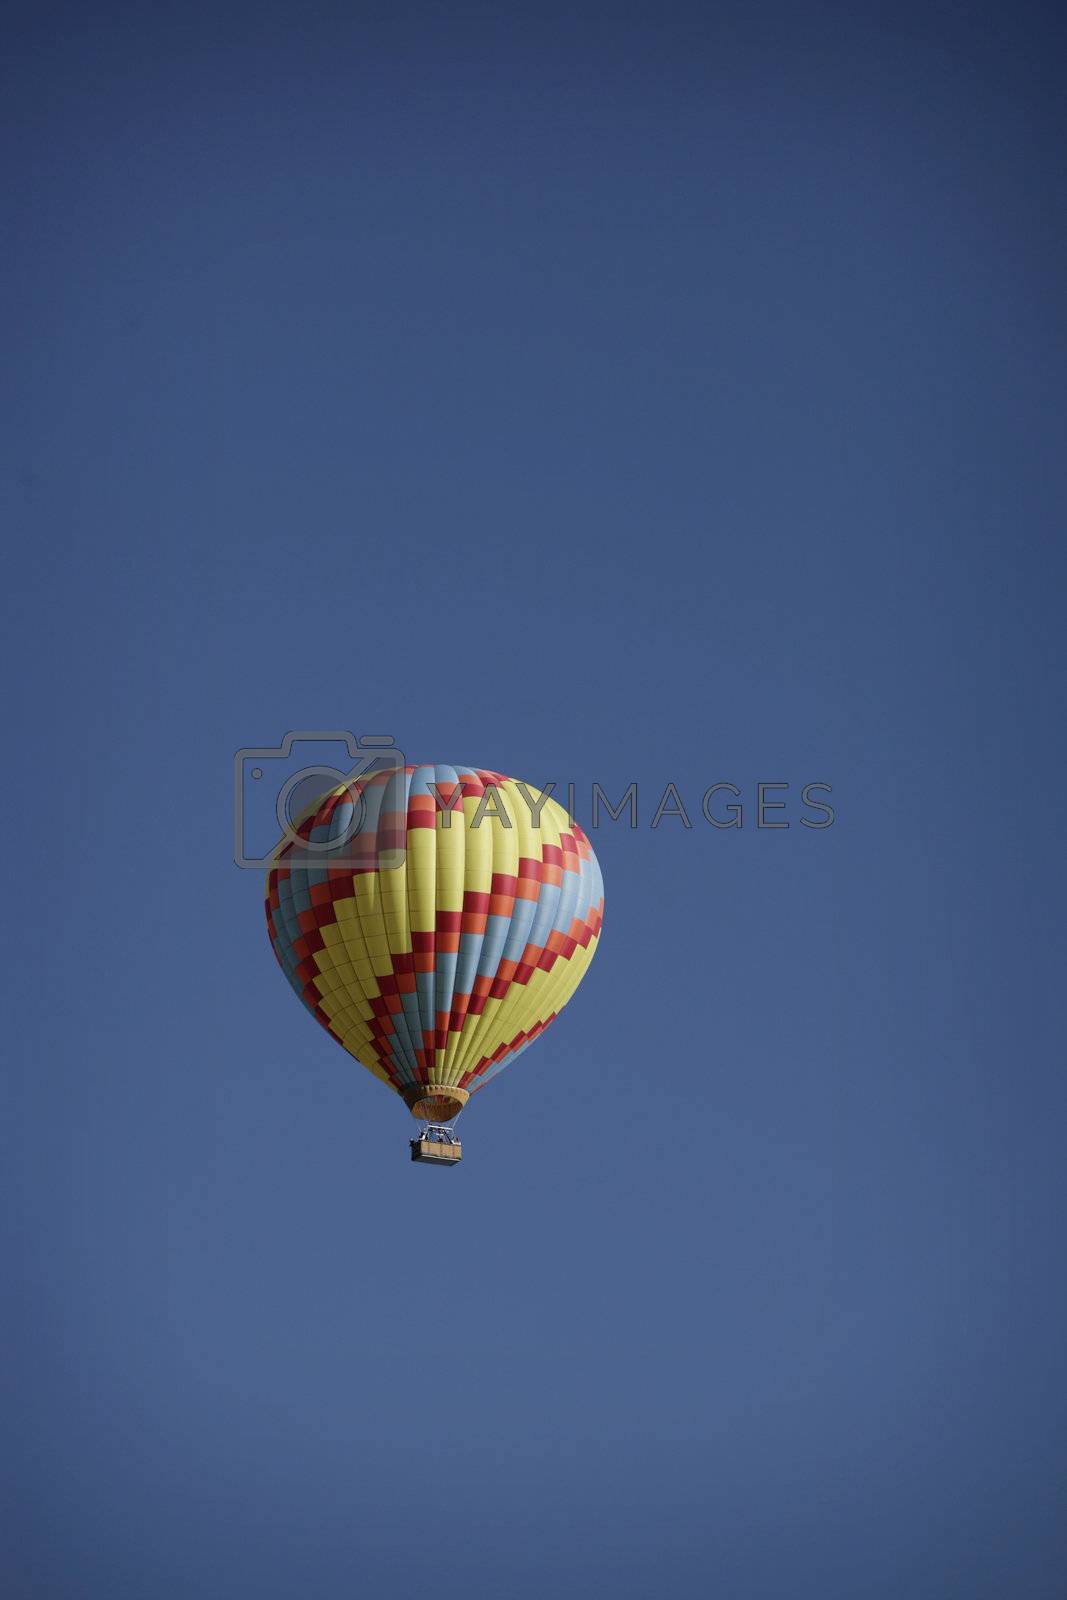 Royalty free image of ballon by RainerPlendl